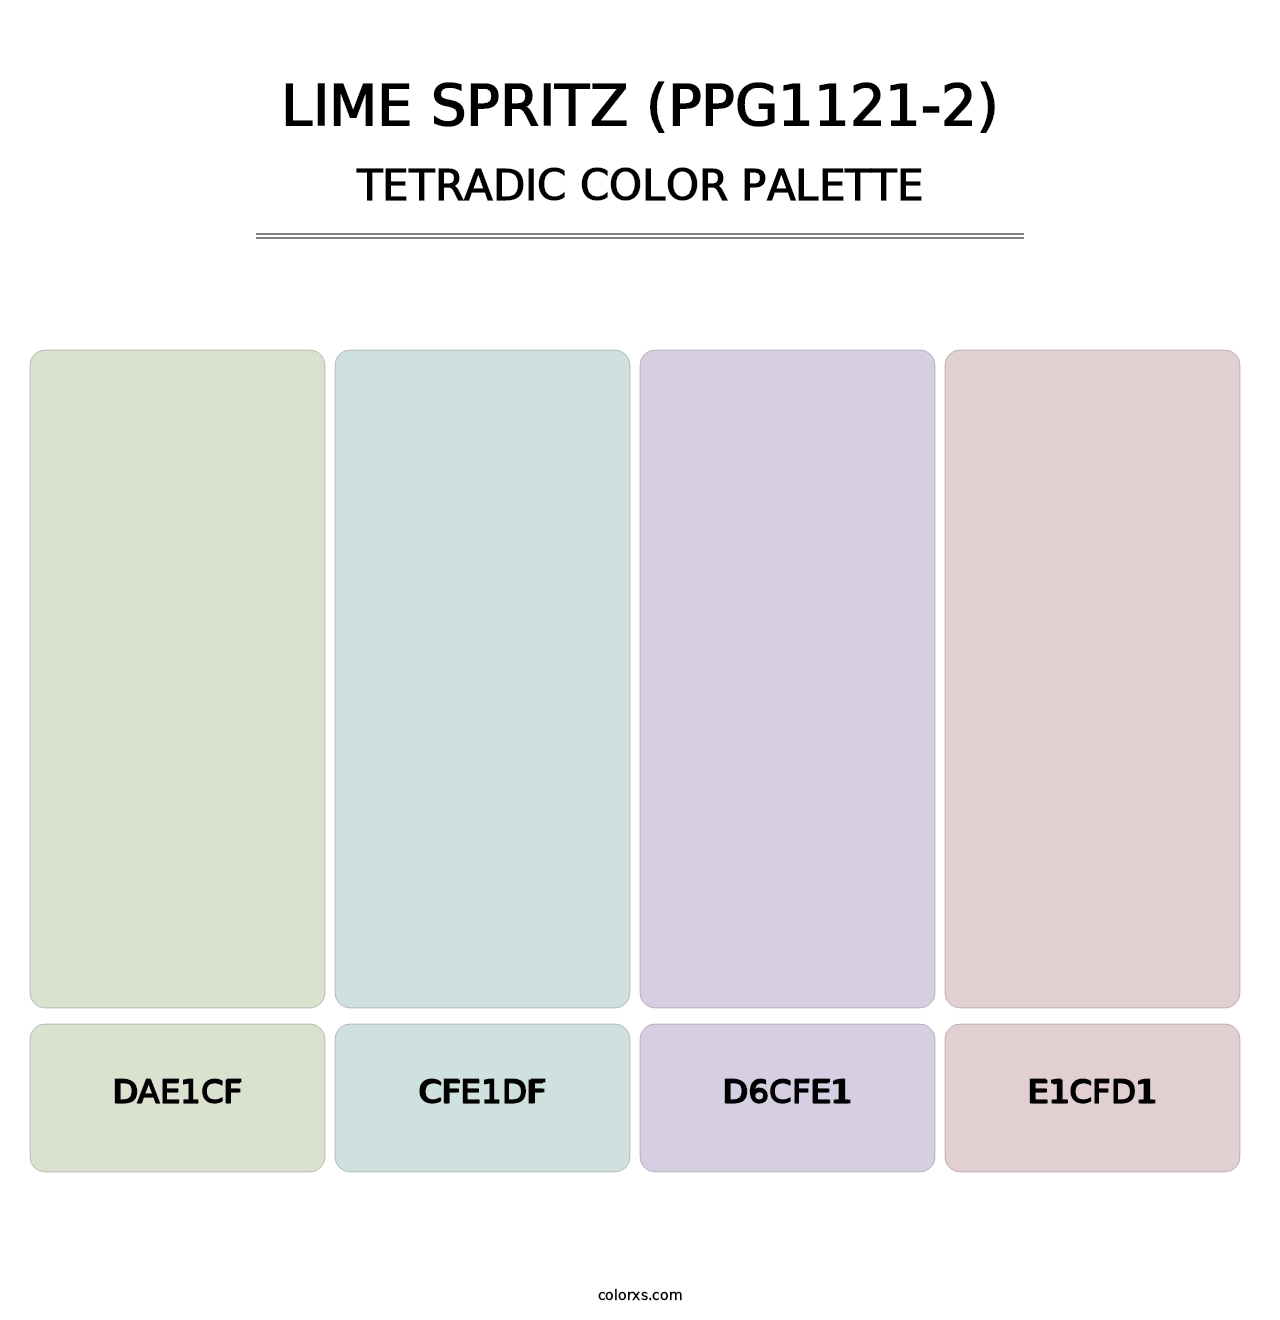 Lime Spritz (PPG1121-2) - Tetradic Color Palette